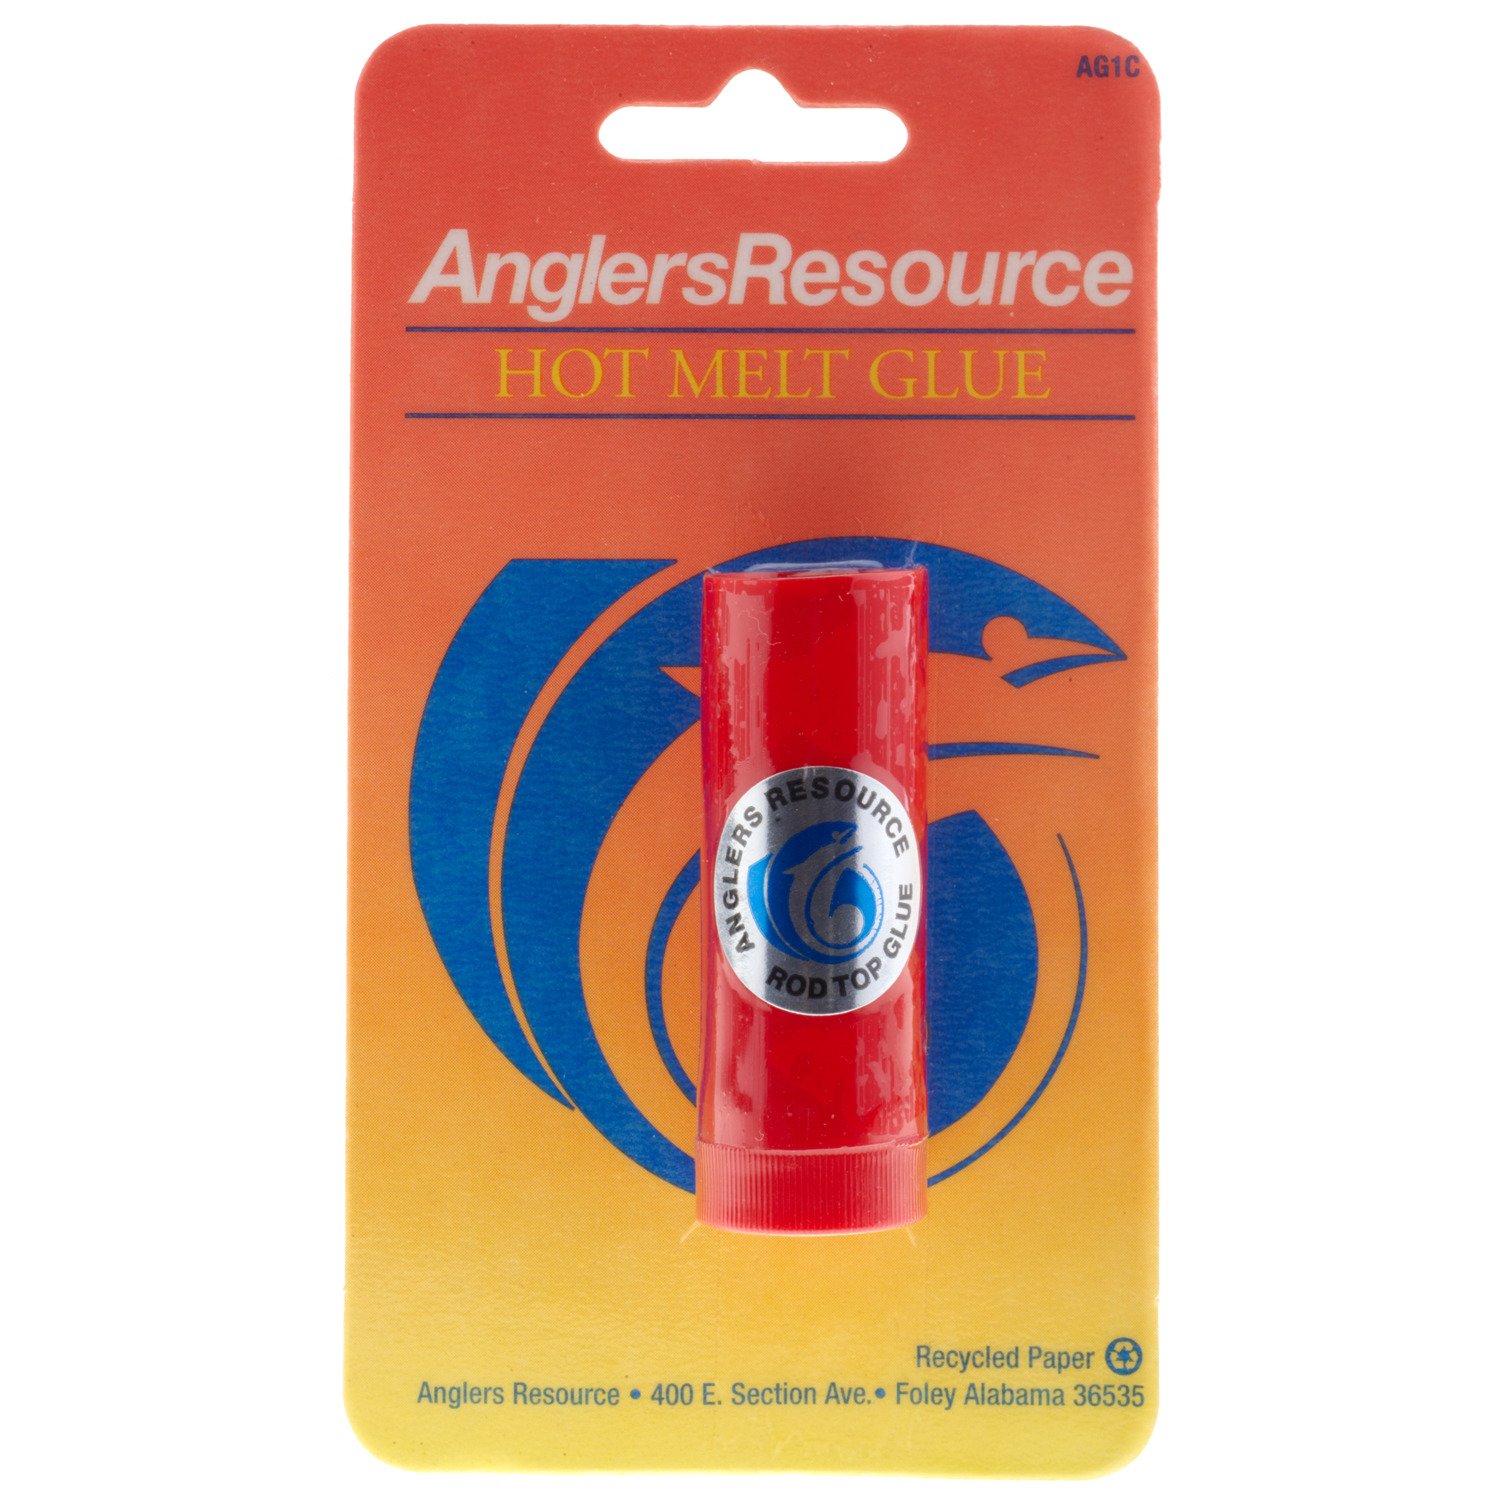 Anglers Resource